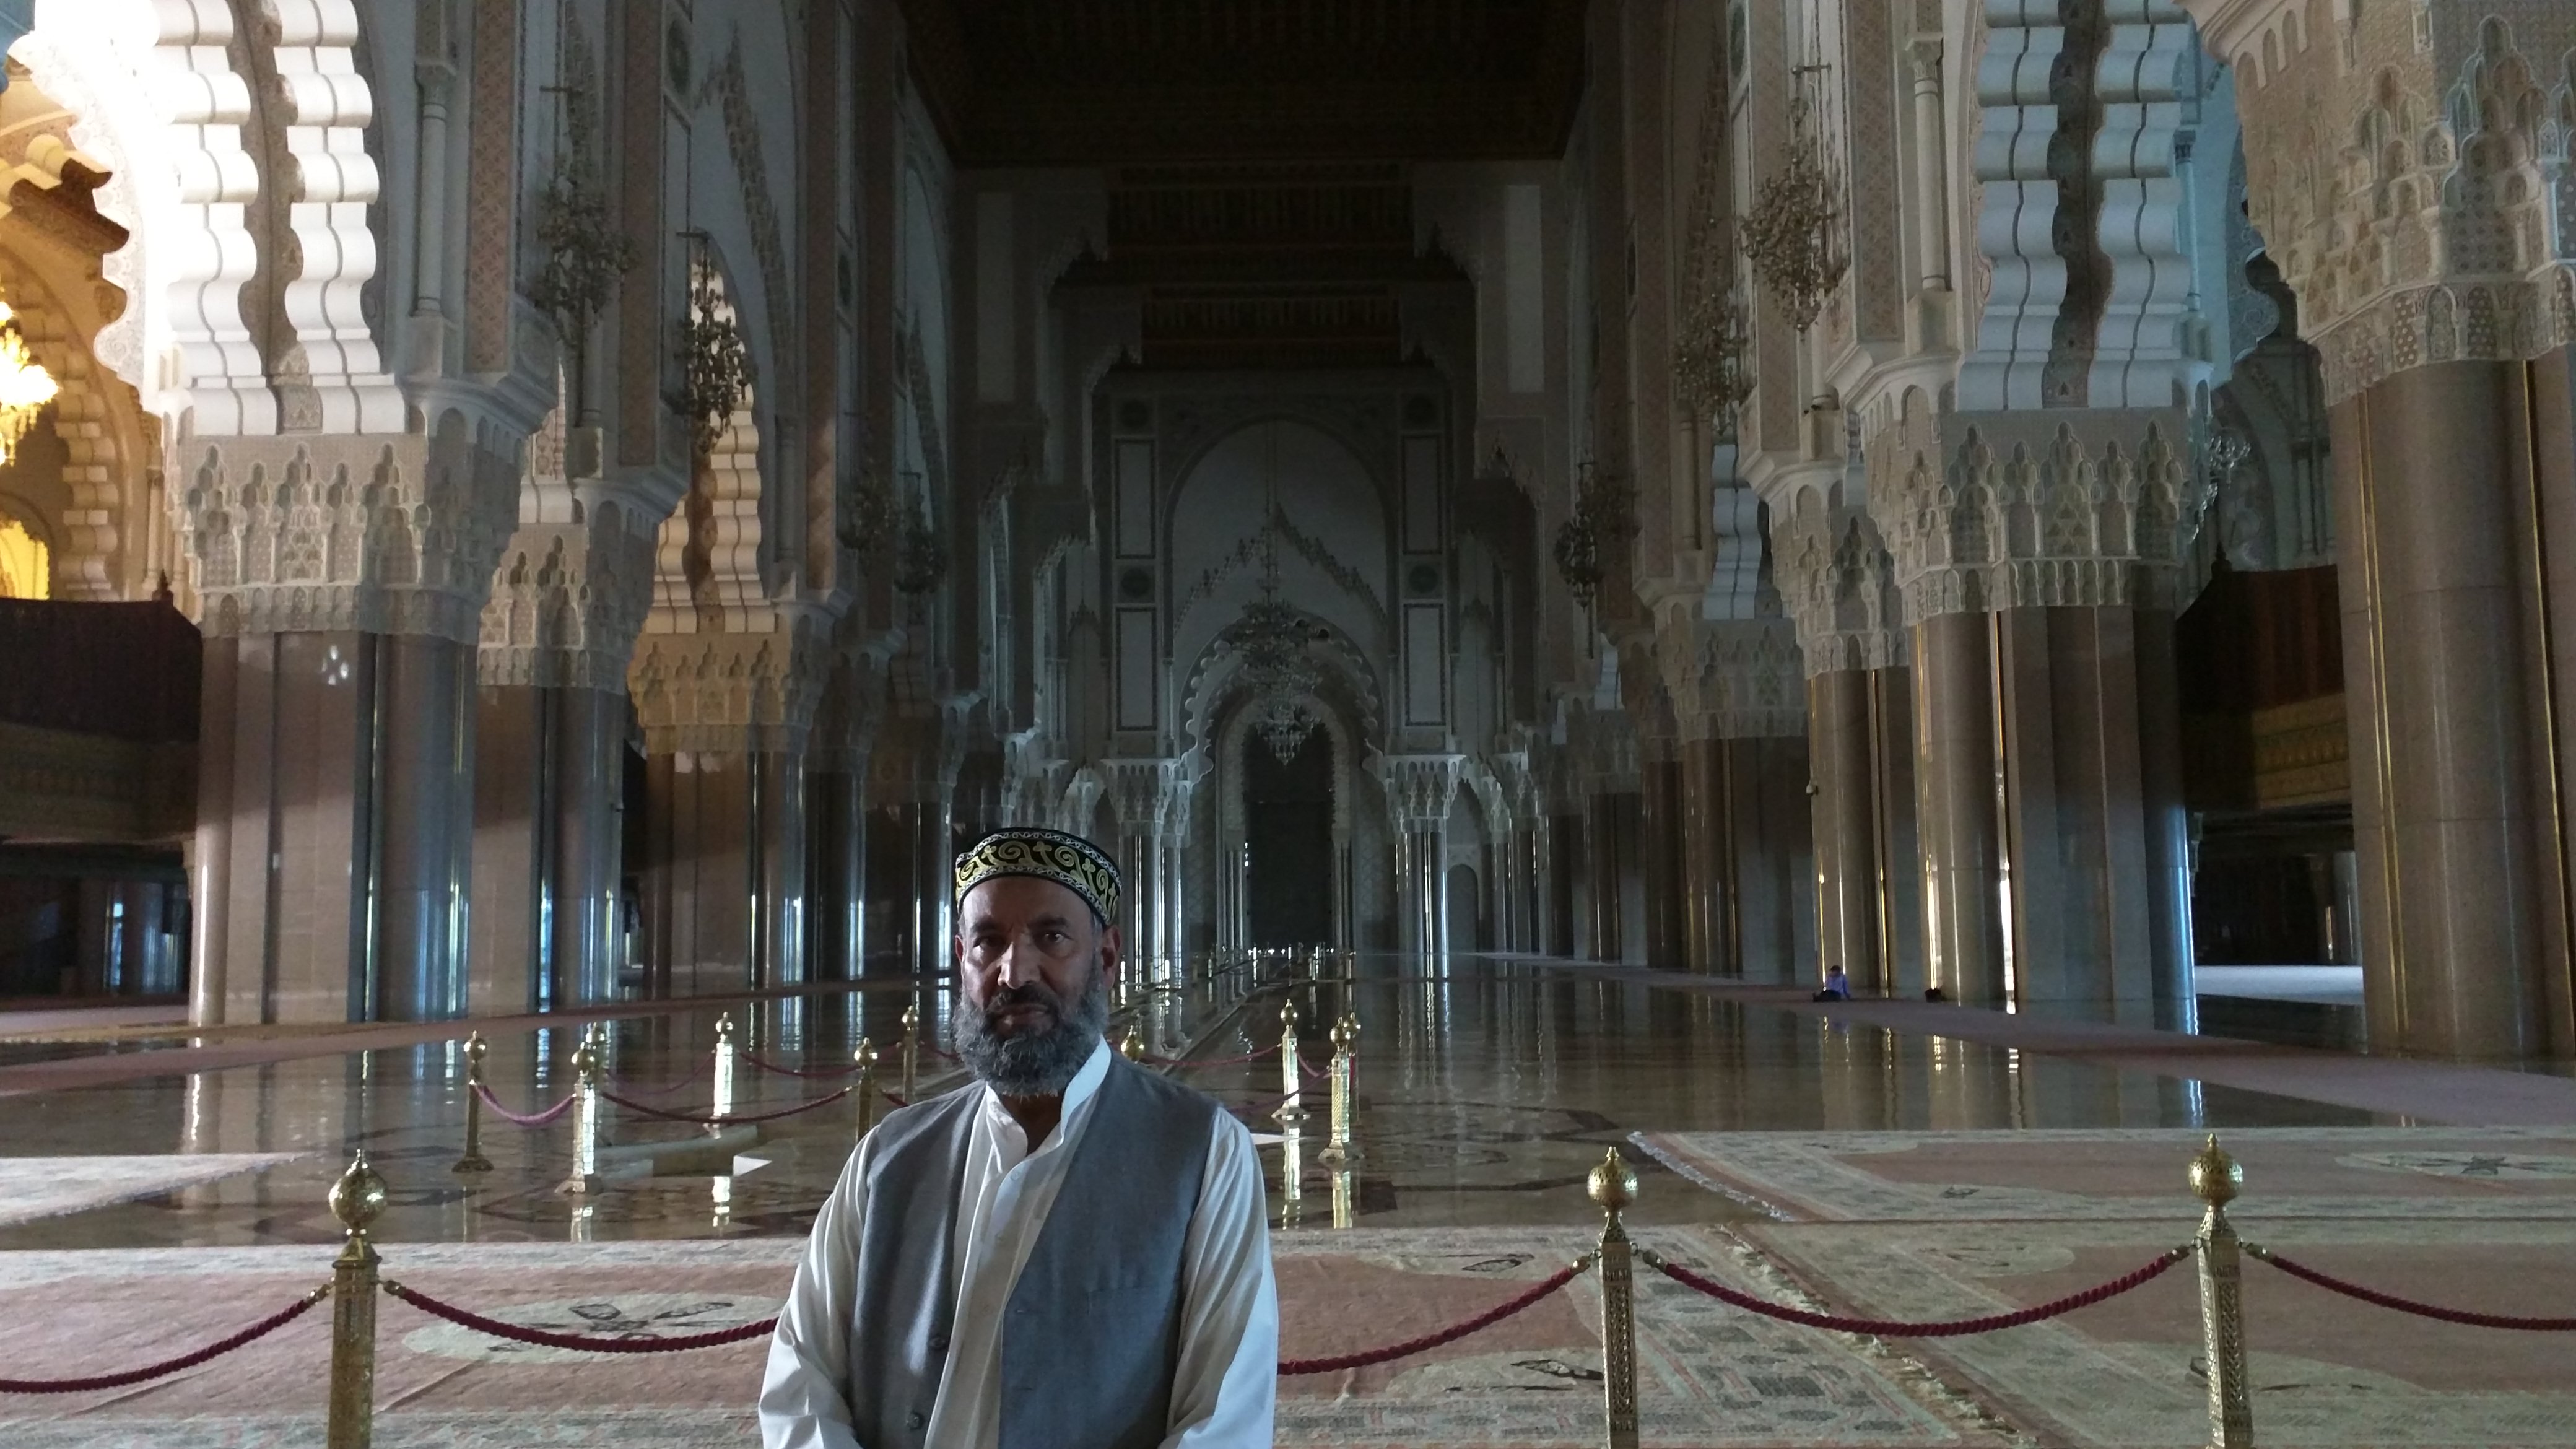 Inside Masjid Hassan II